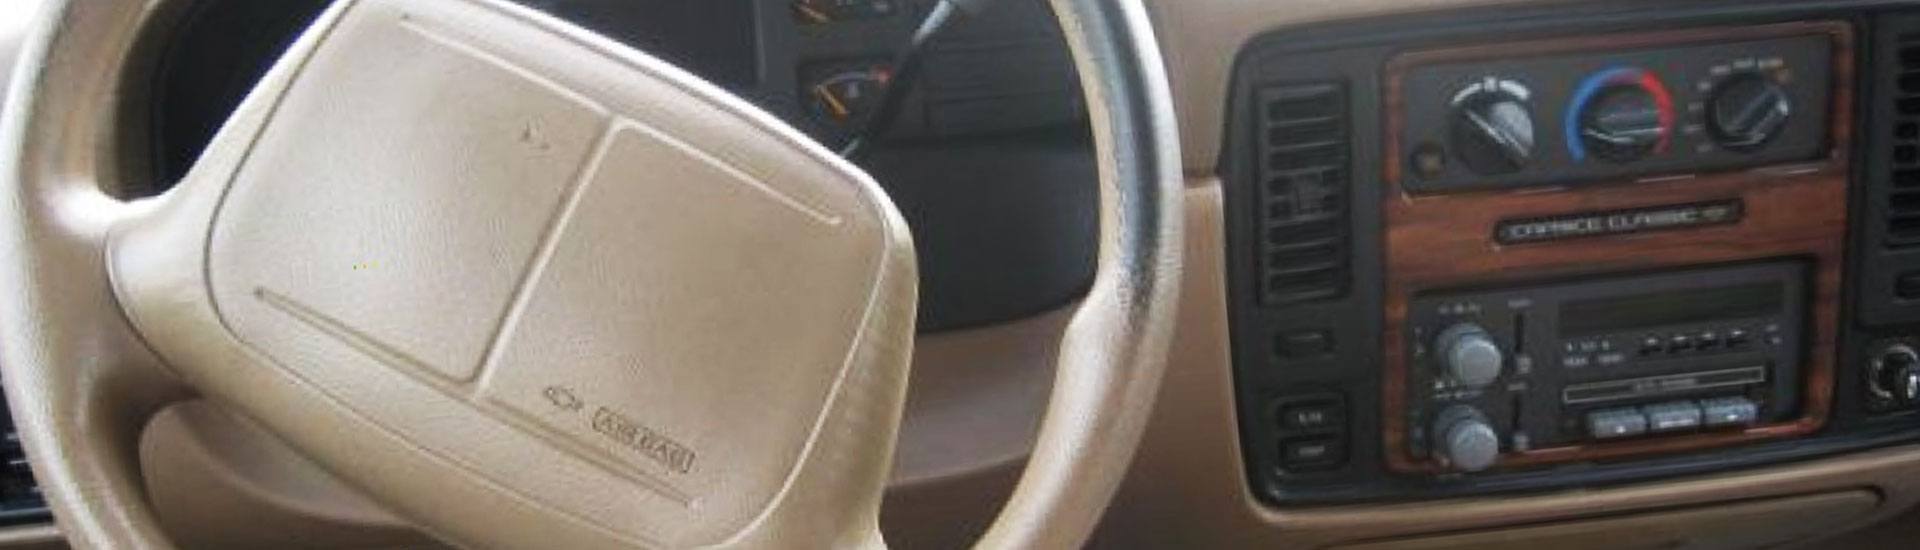 1995 Chevrolet Caprice Dash Kits